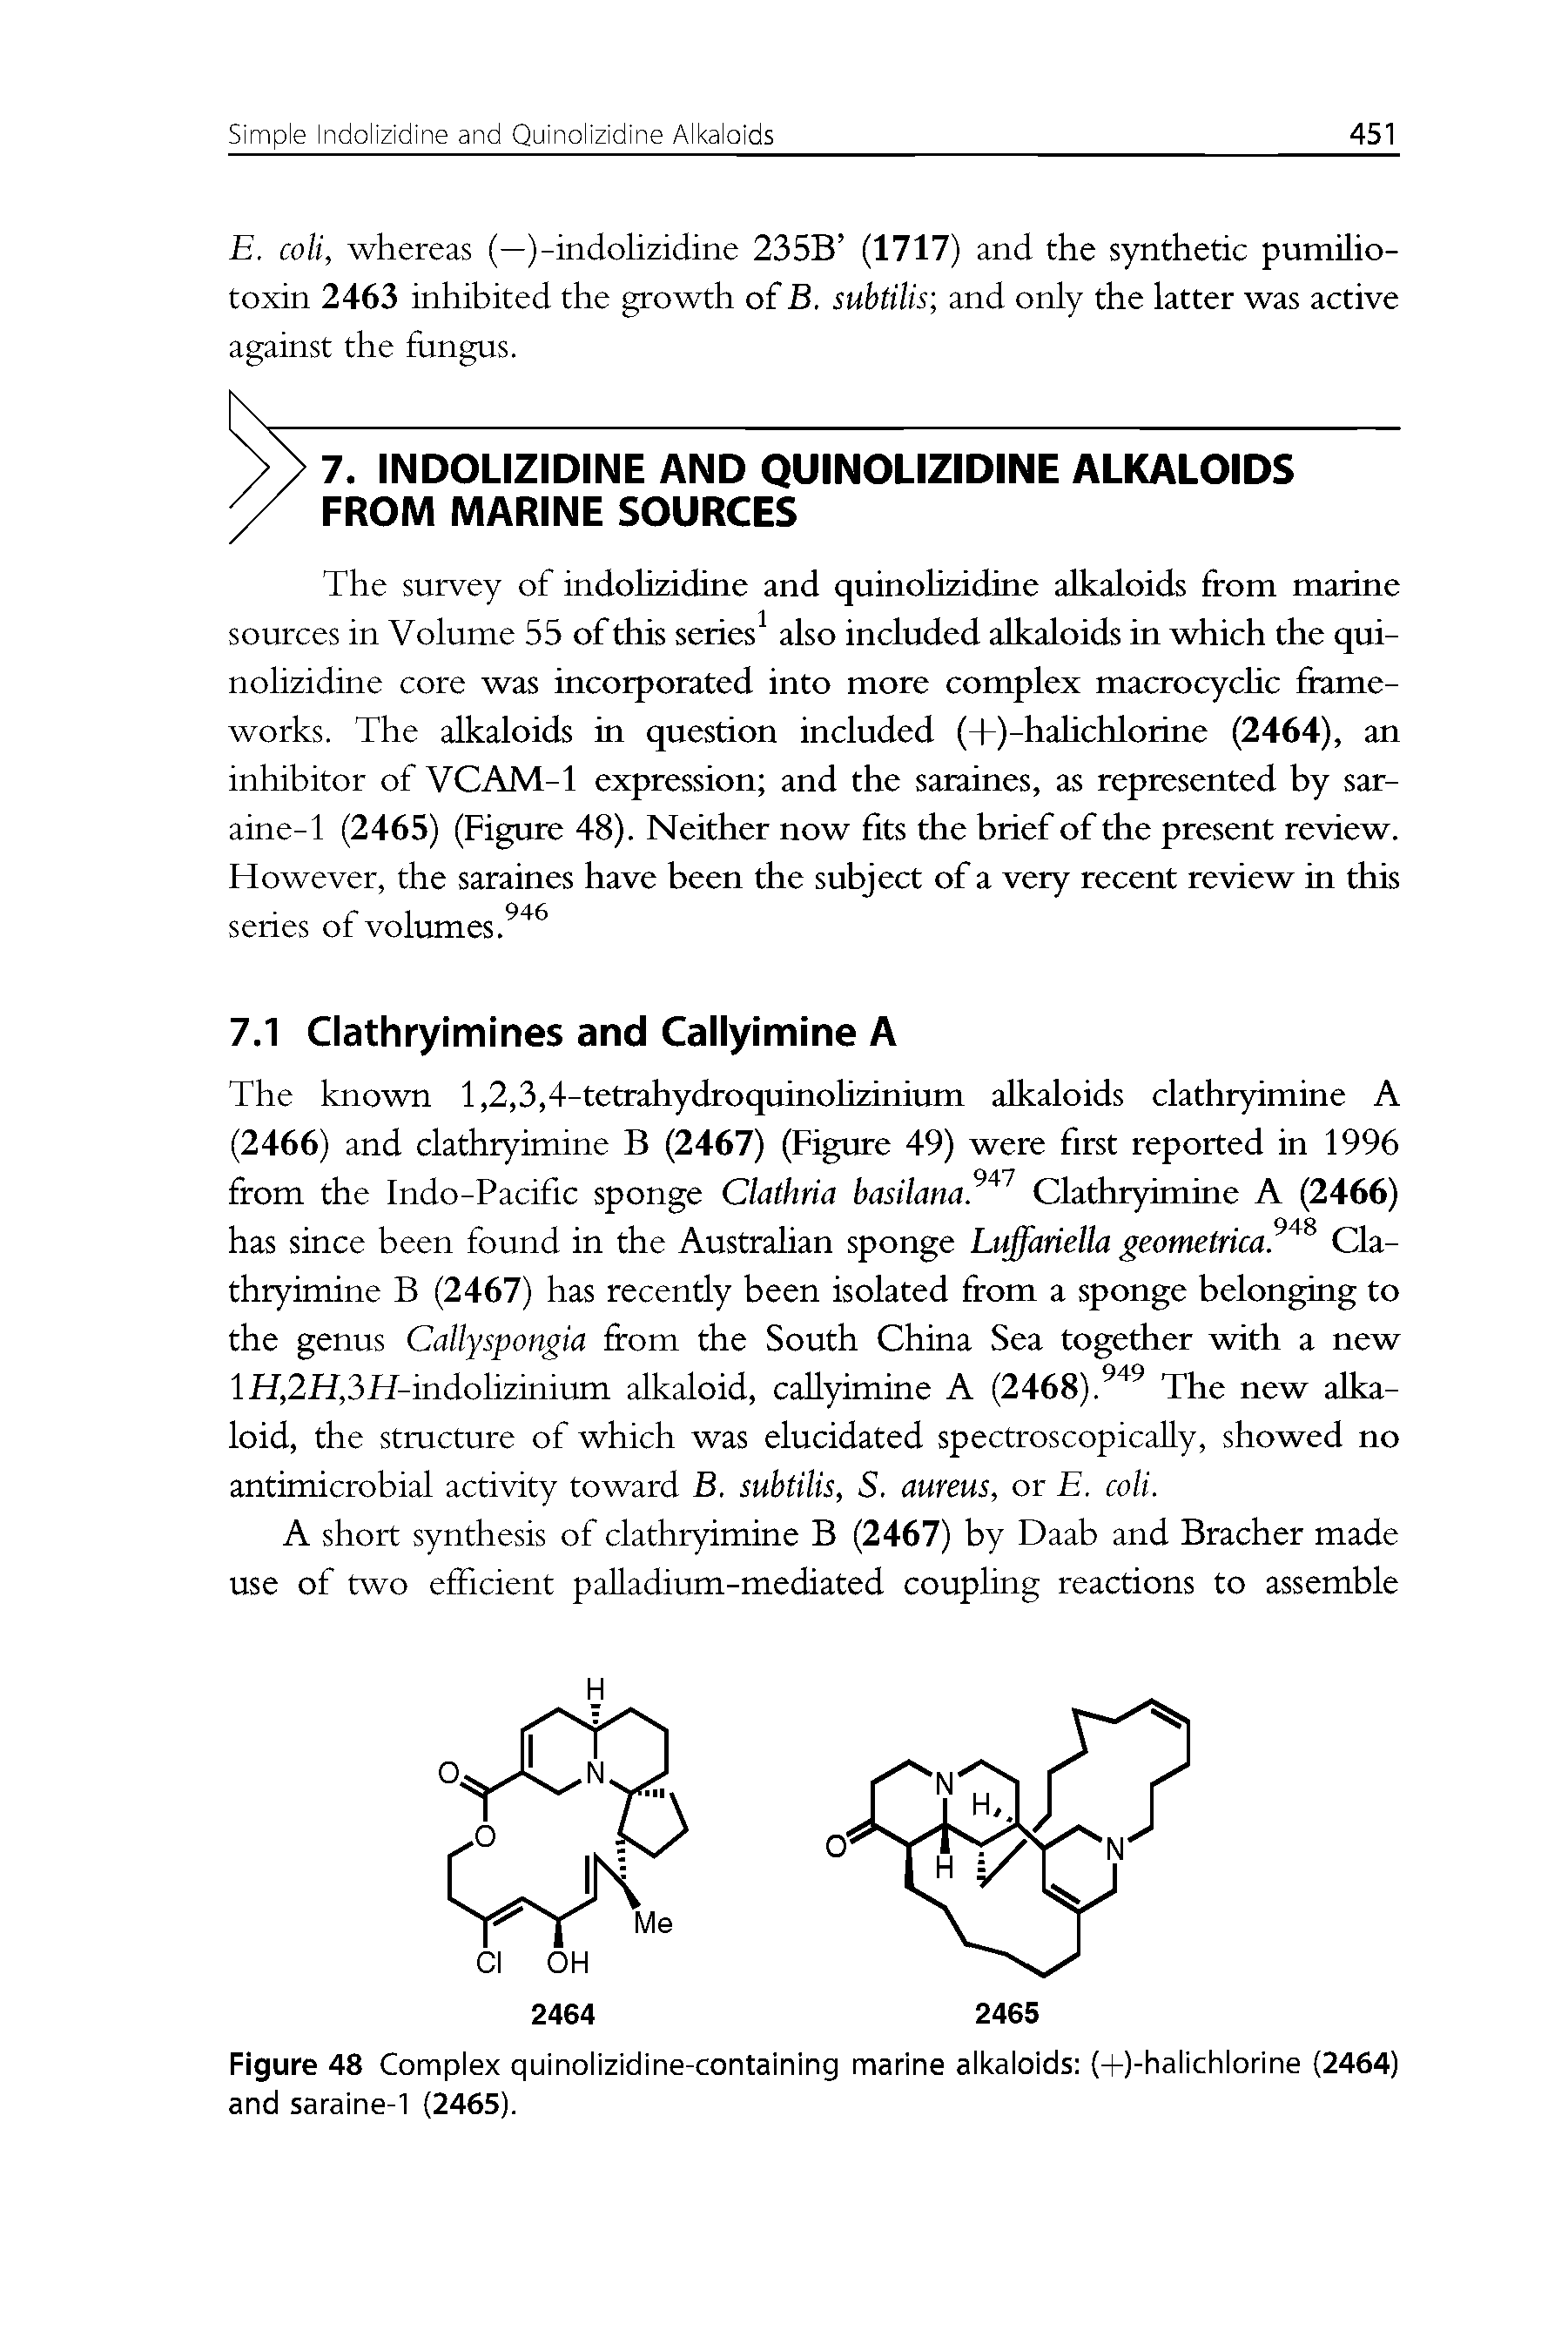 Figure 48 Complex quinolizidine-containing marine alkaloids (-l-)-halichlorine (2464) and saraine-1 (2465).